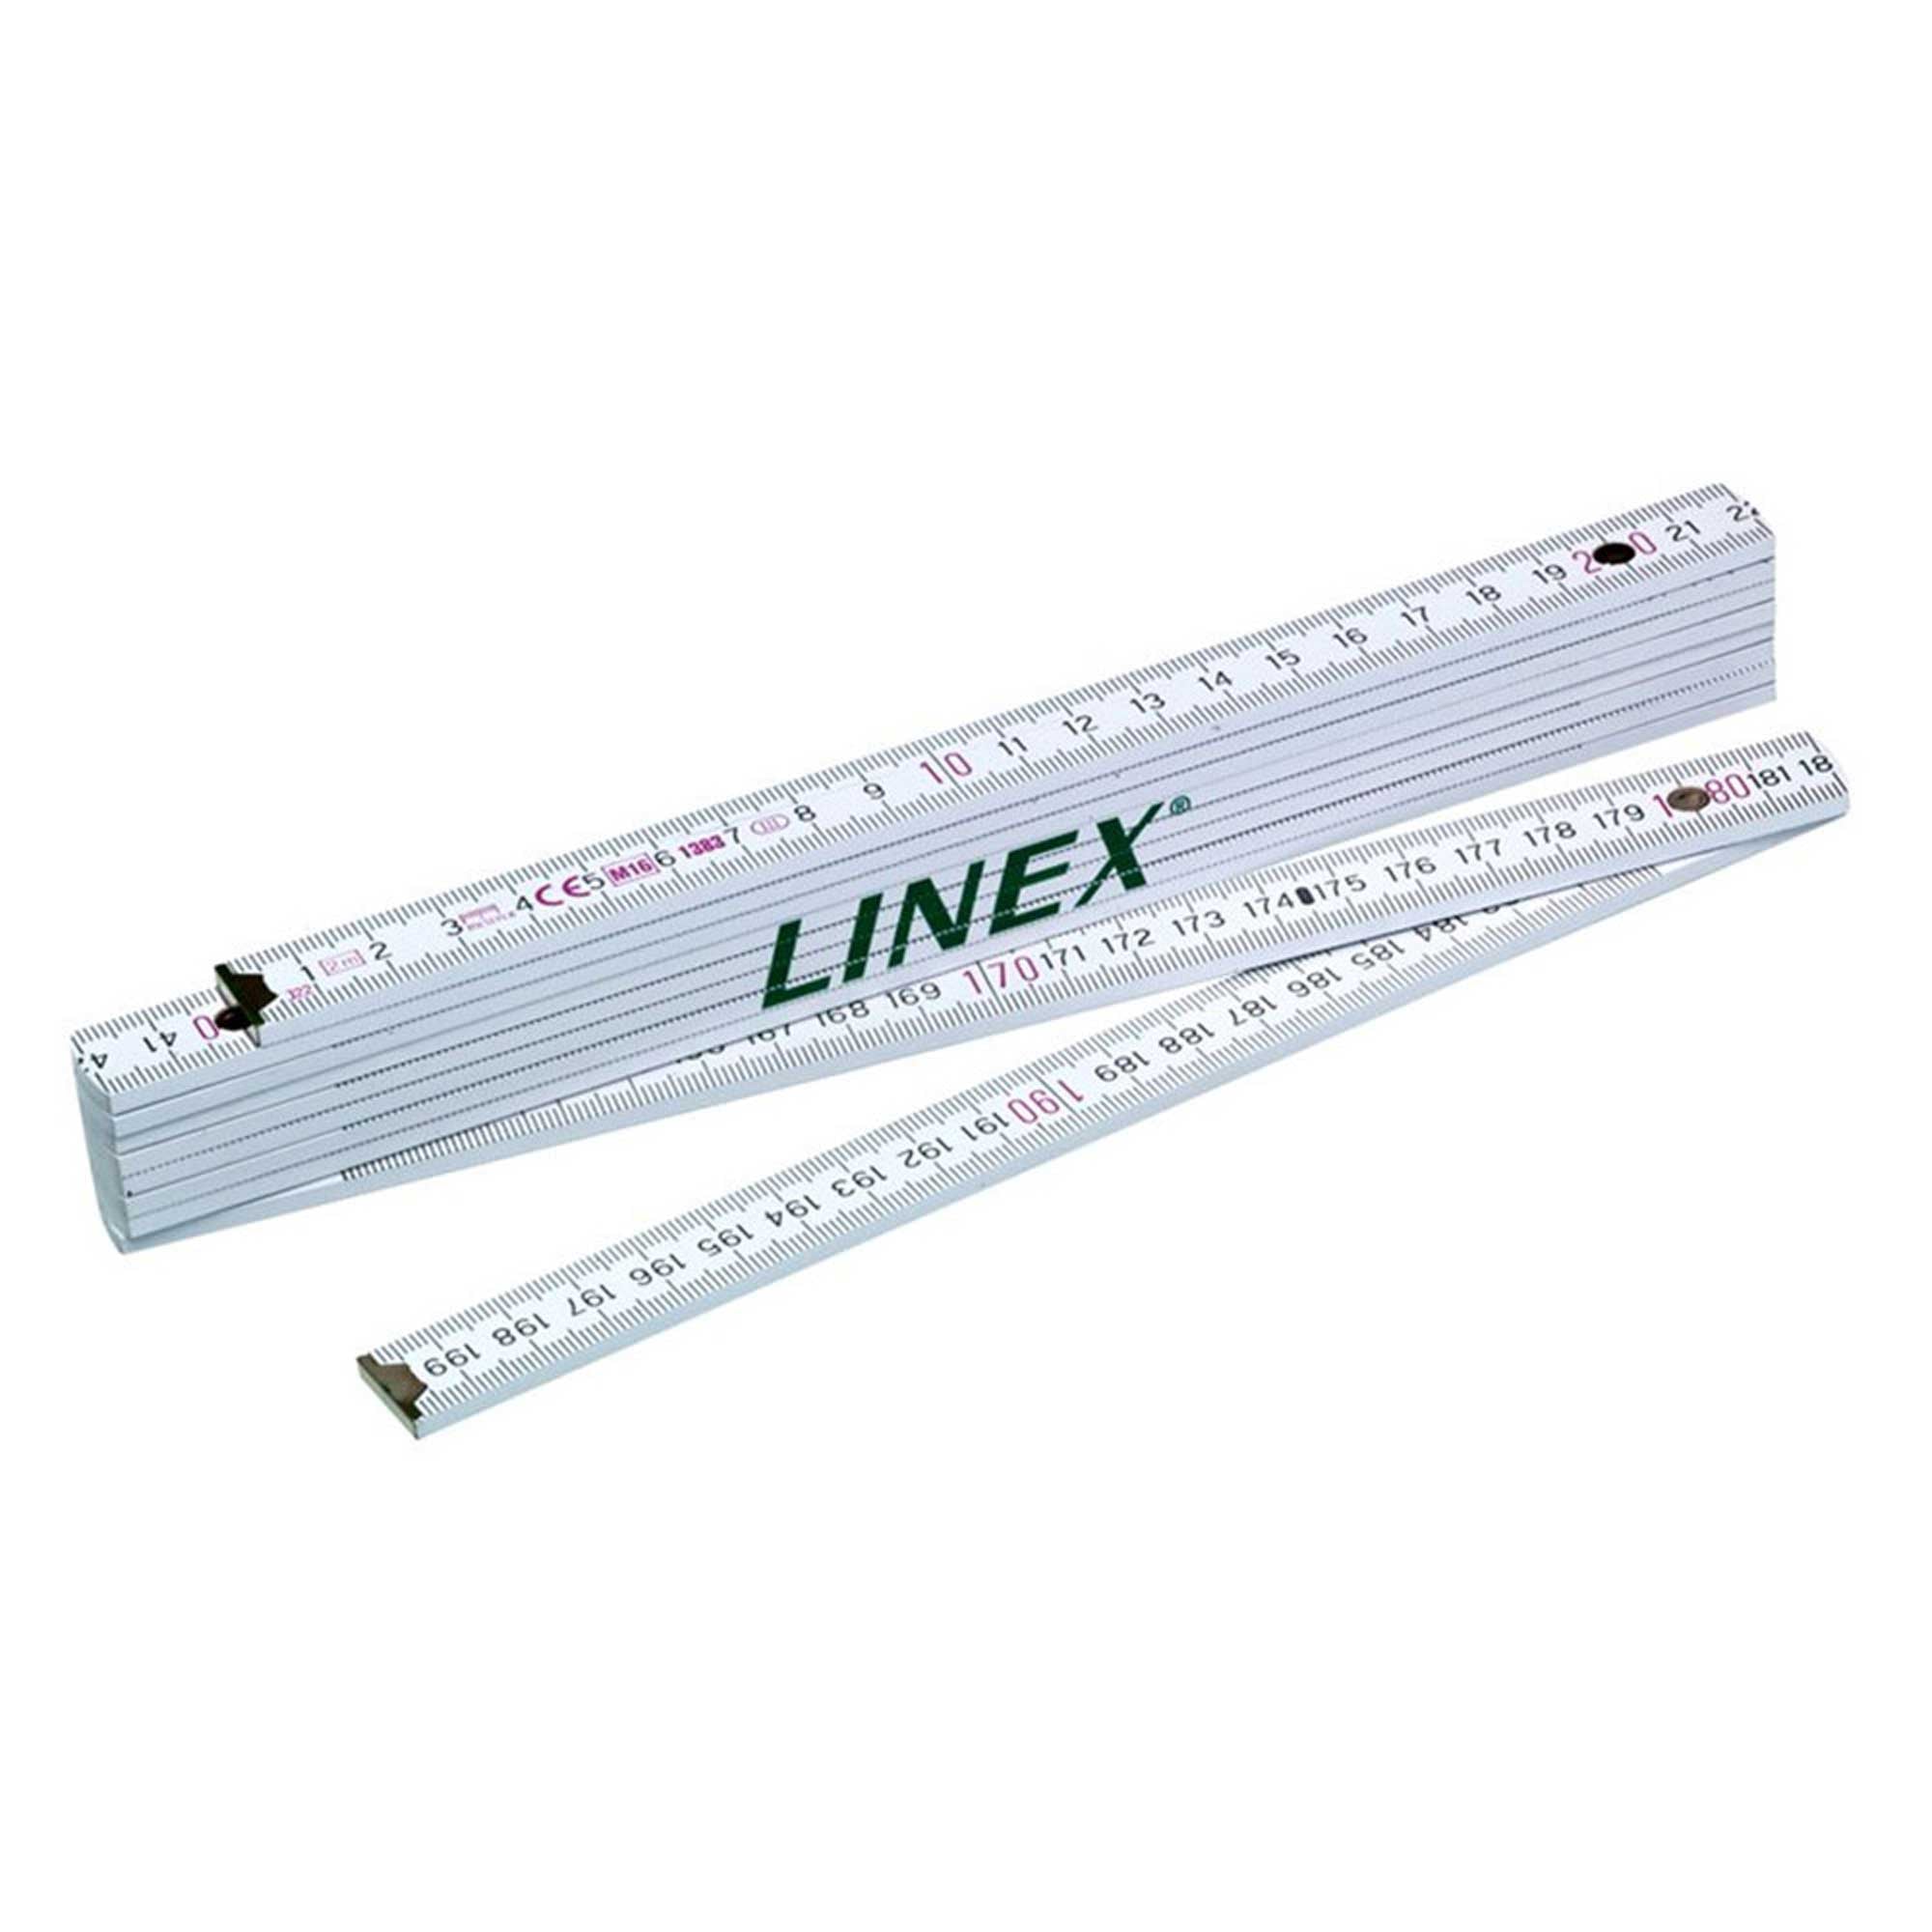 Linex Wooden Folding Ruler - 2m/78"